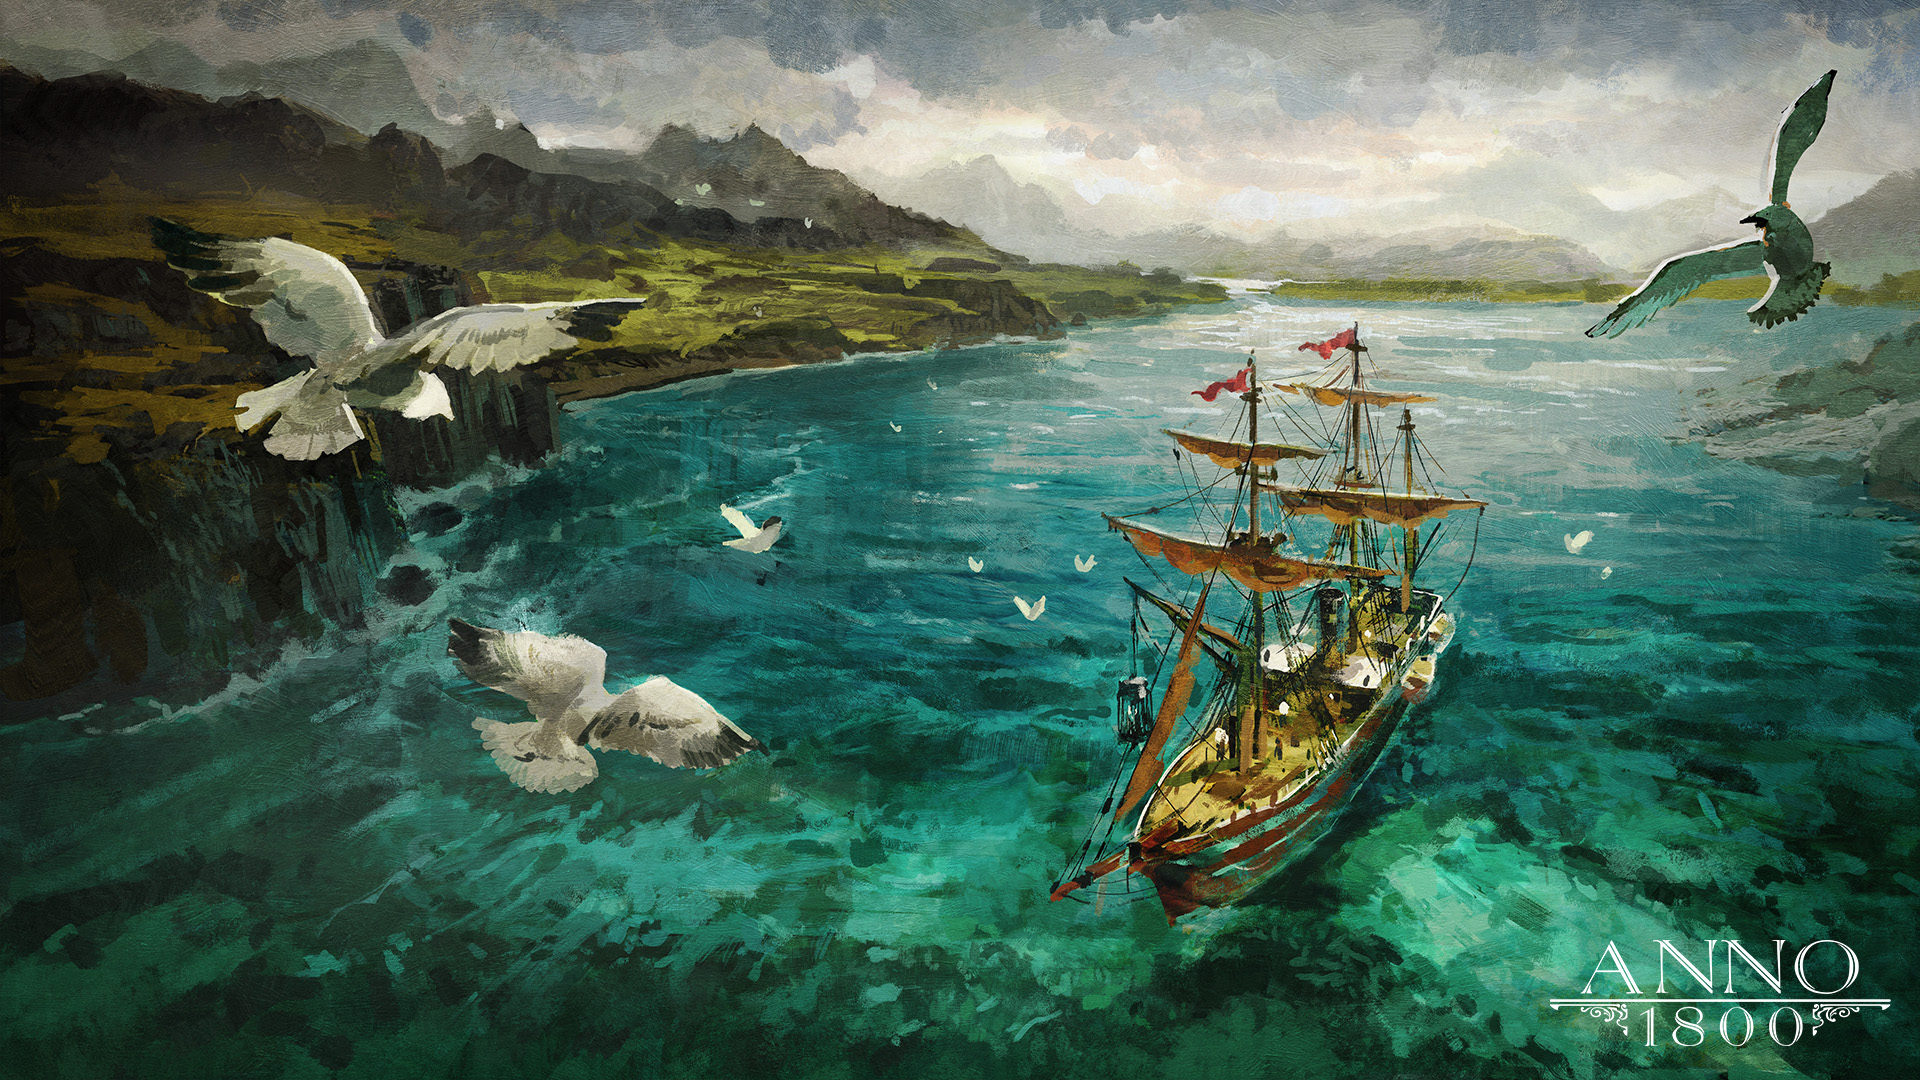 Anno 1800 1800s Digital Art Concept Art Artwork Ubisoft Sailing Ship Frigates Seagulls River 1920x1080